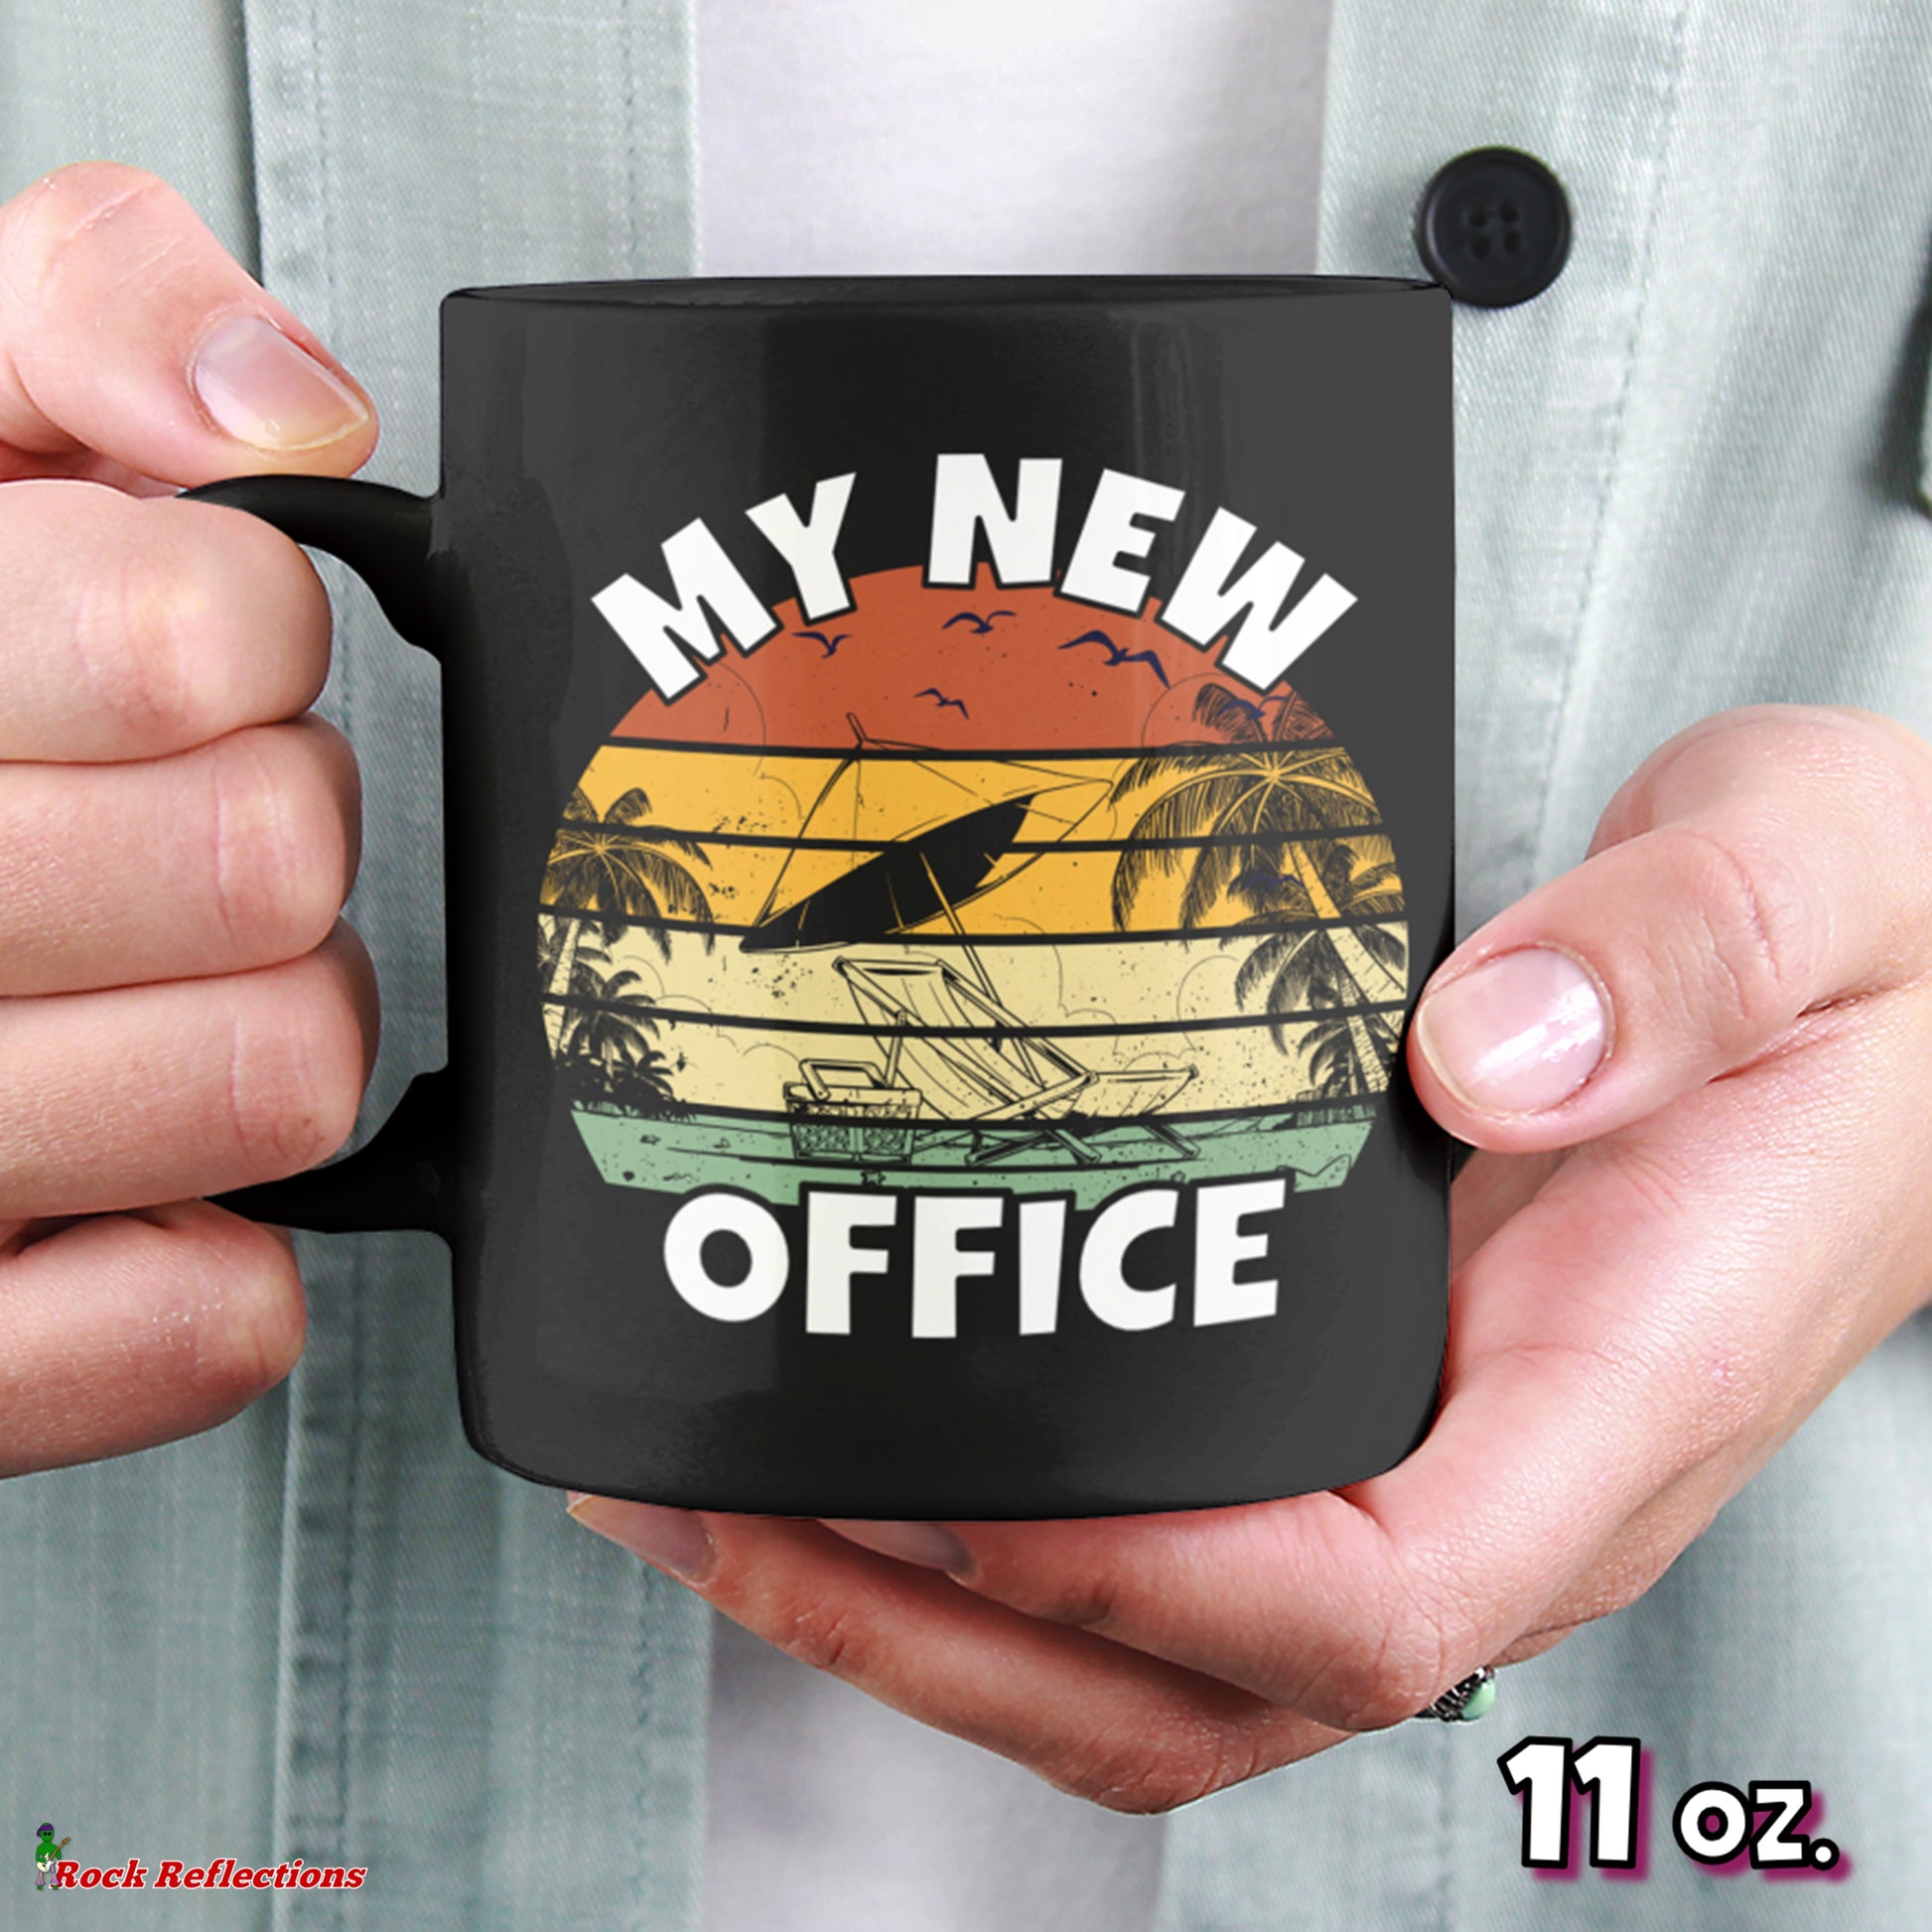 My New Office Black Mug CustomCat